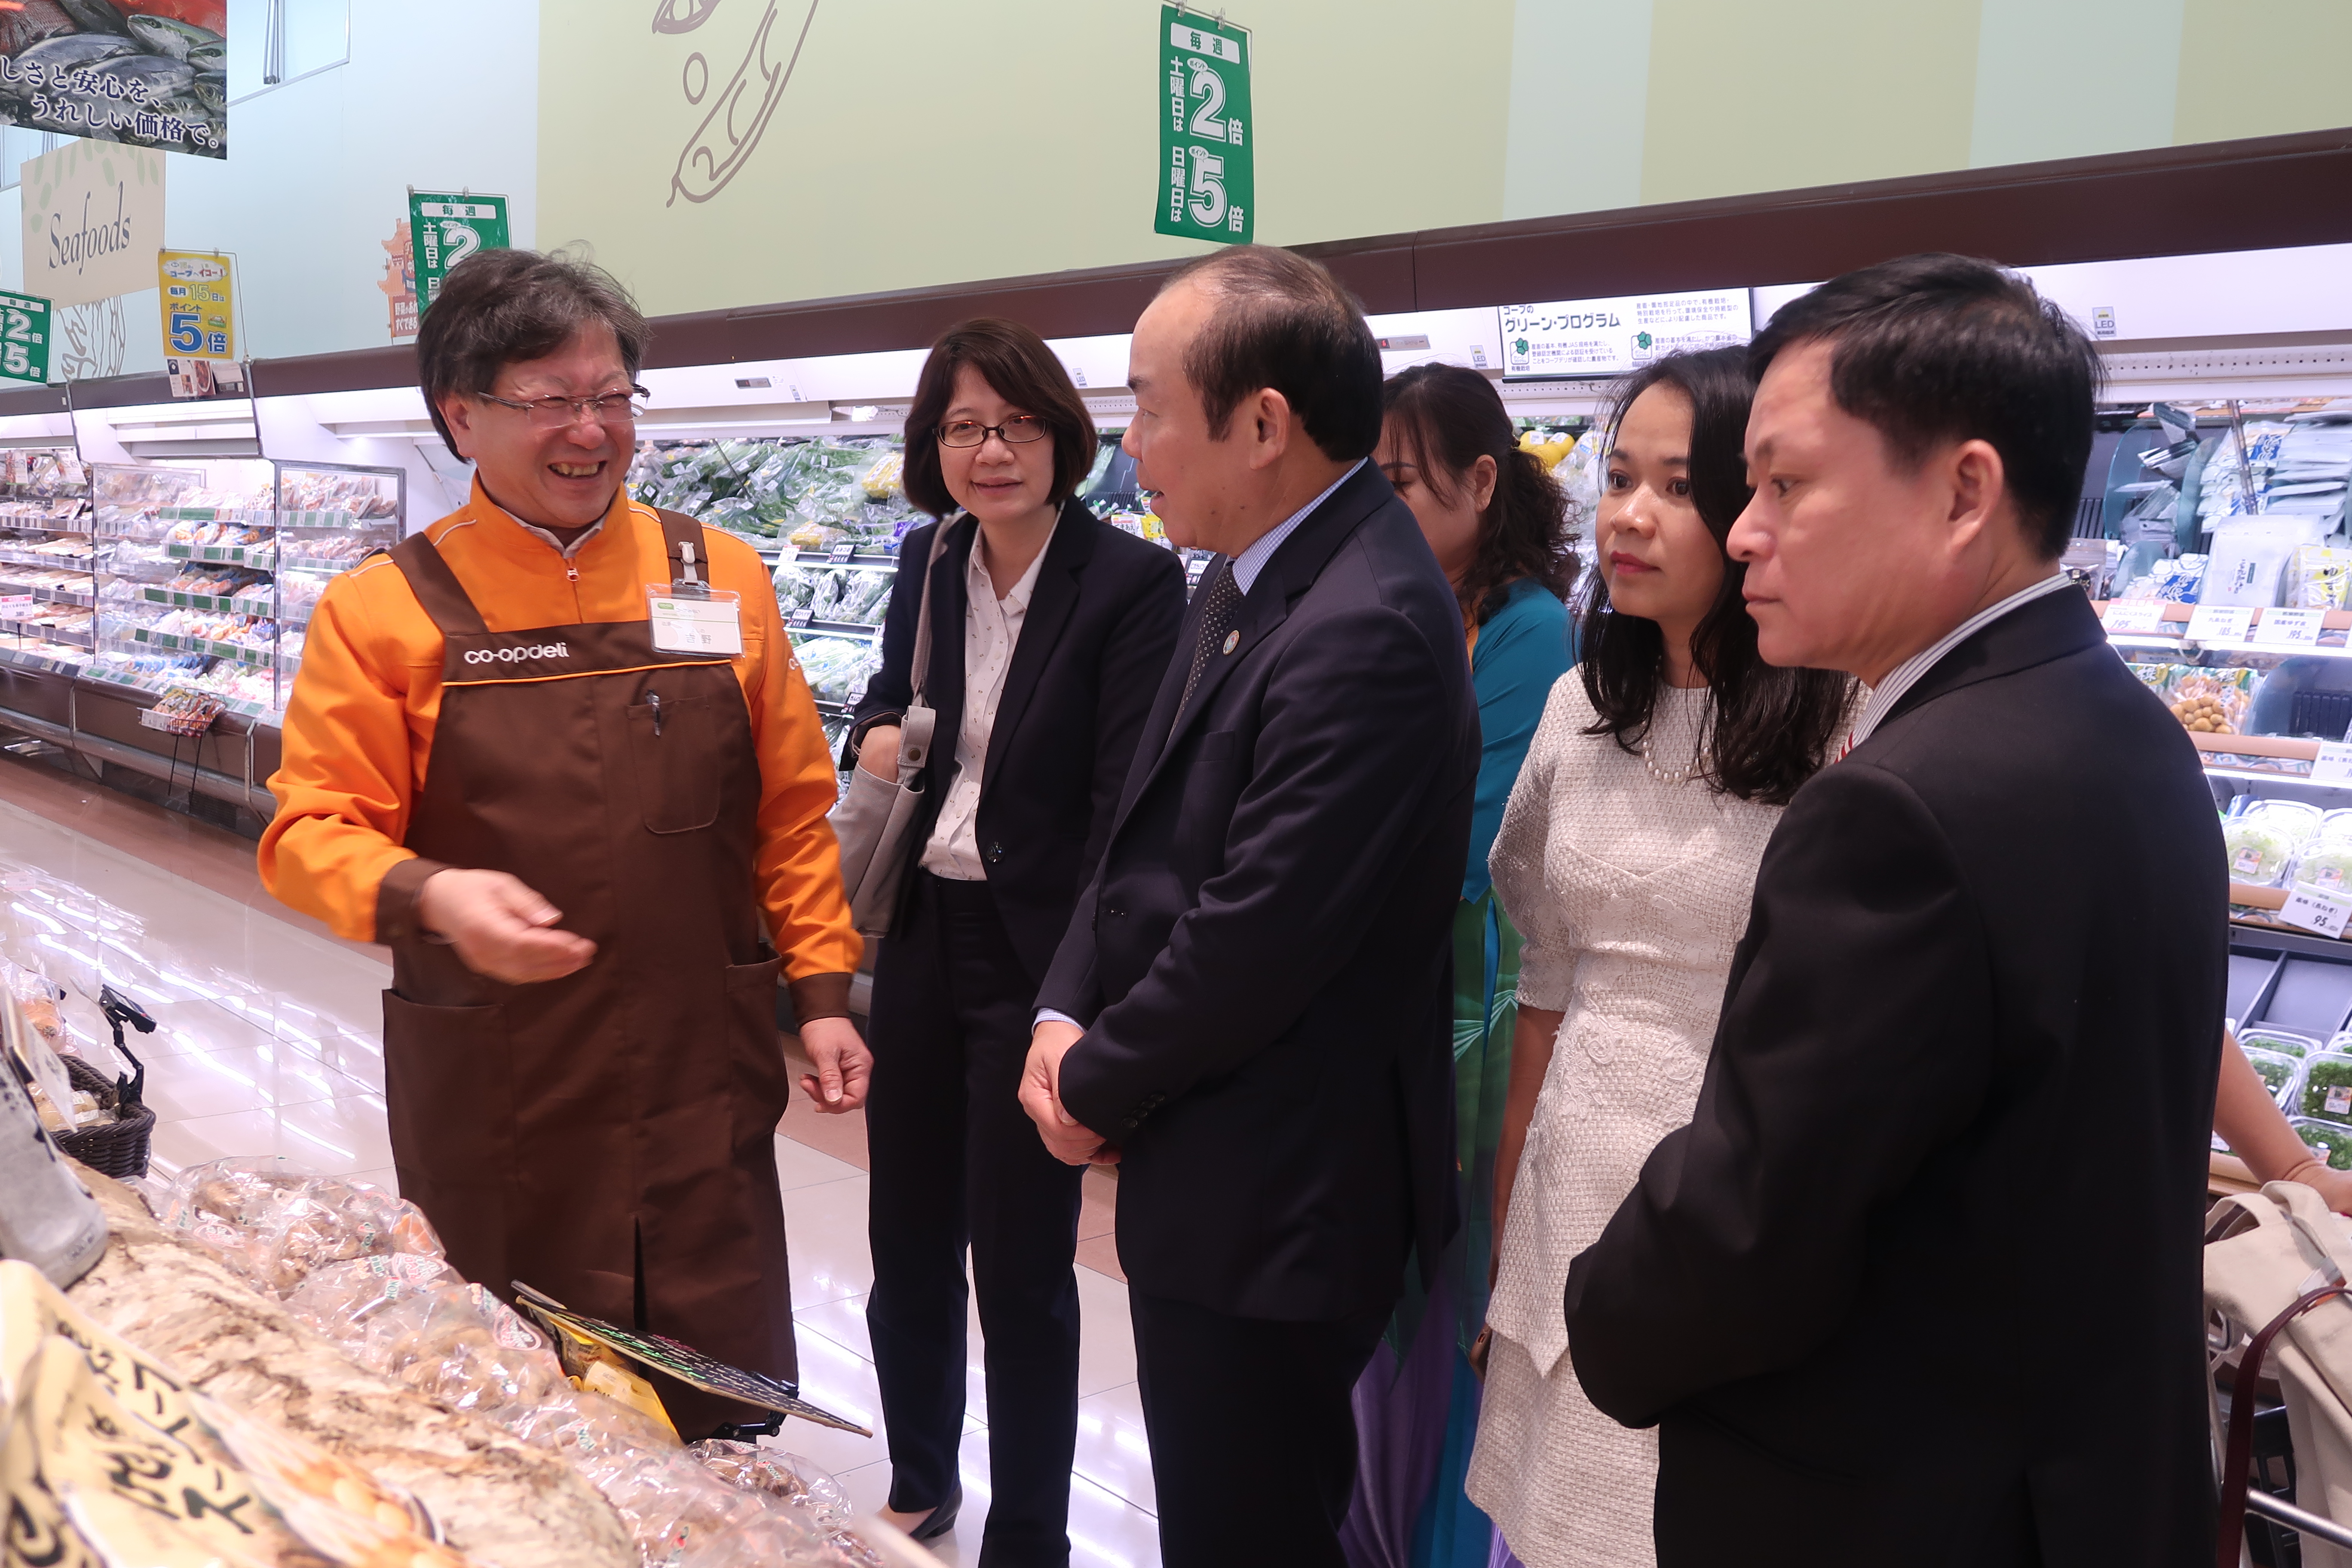 Vietnam Cooperative Alliance paid a courtesy visit to JCCU